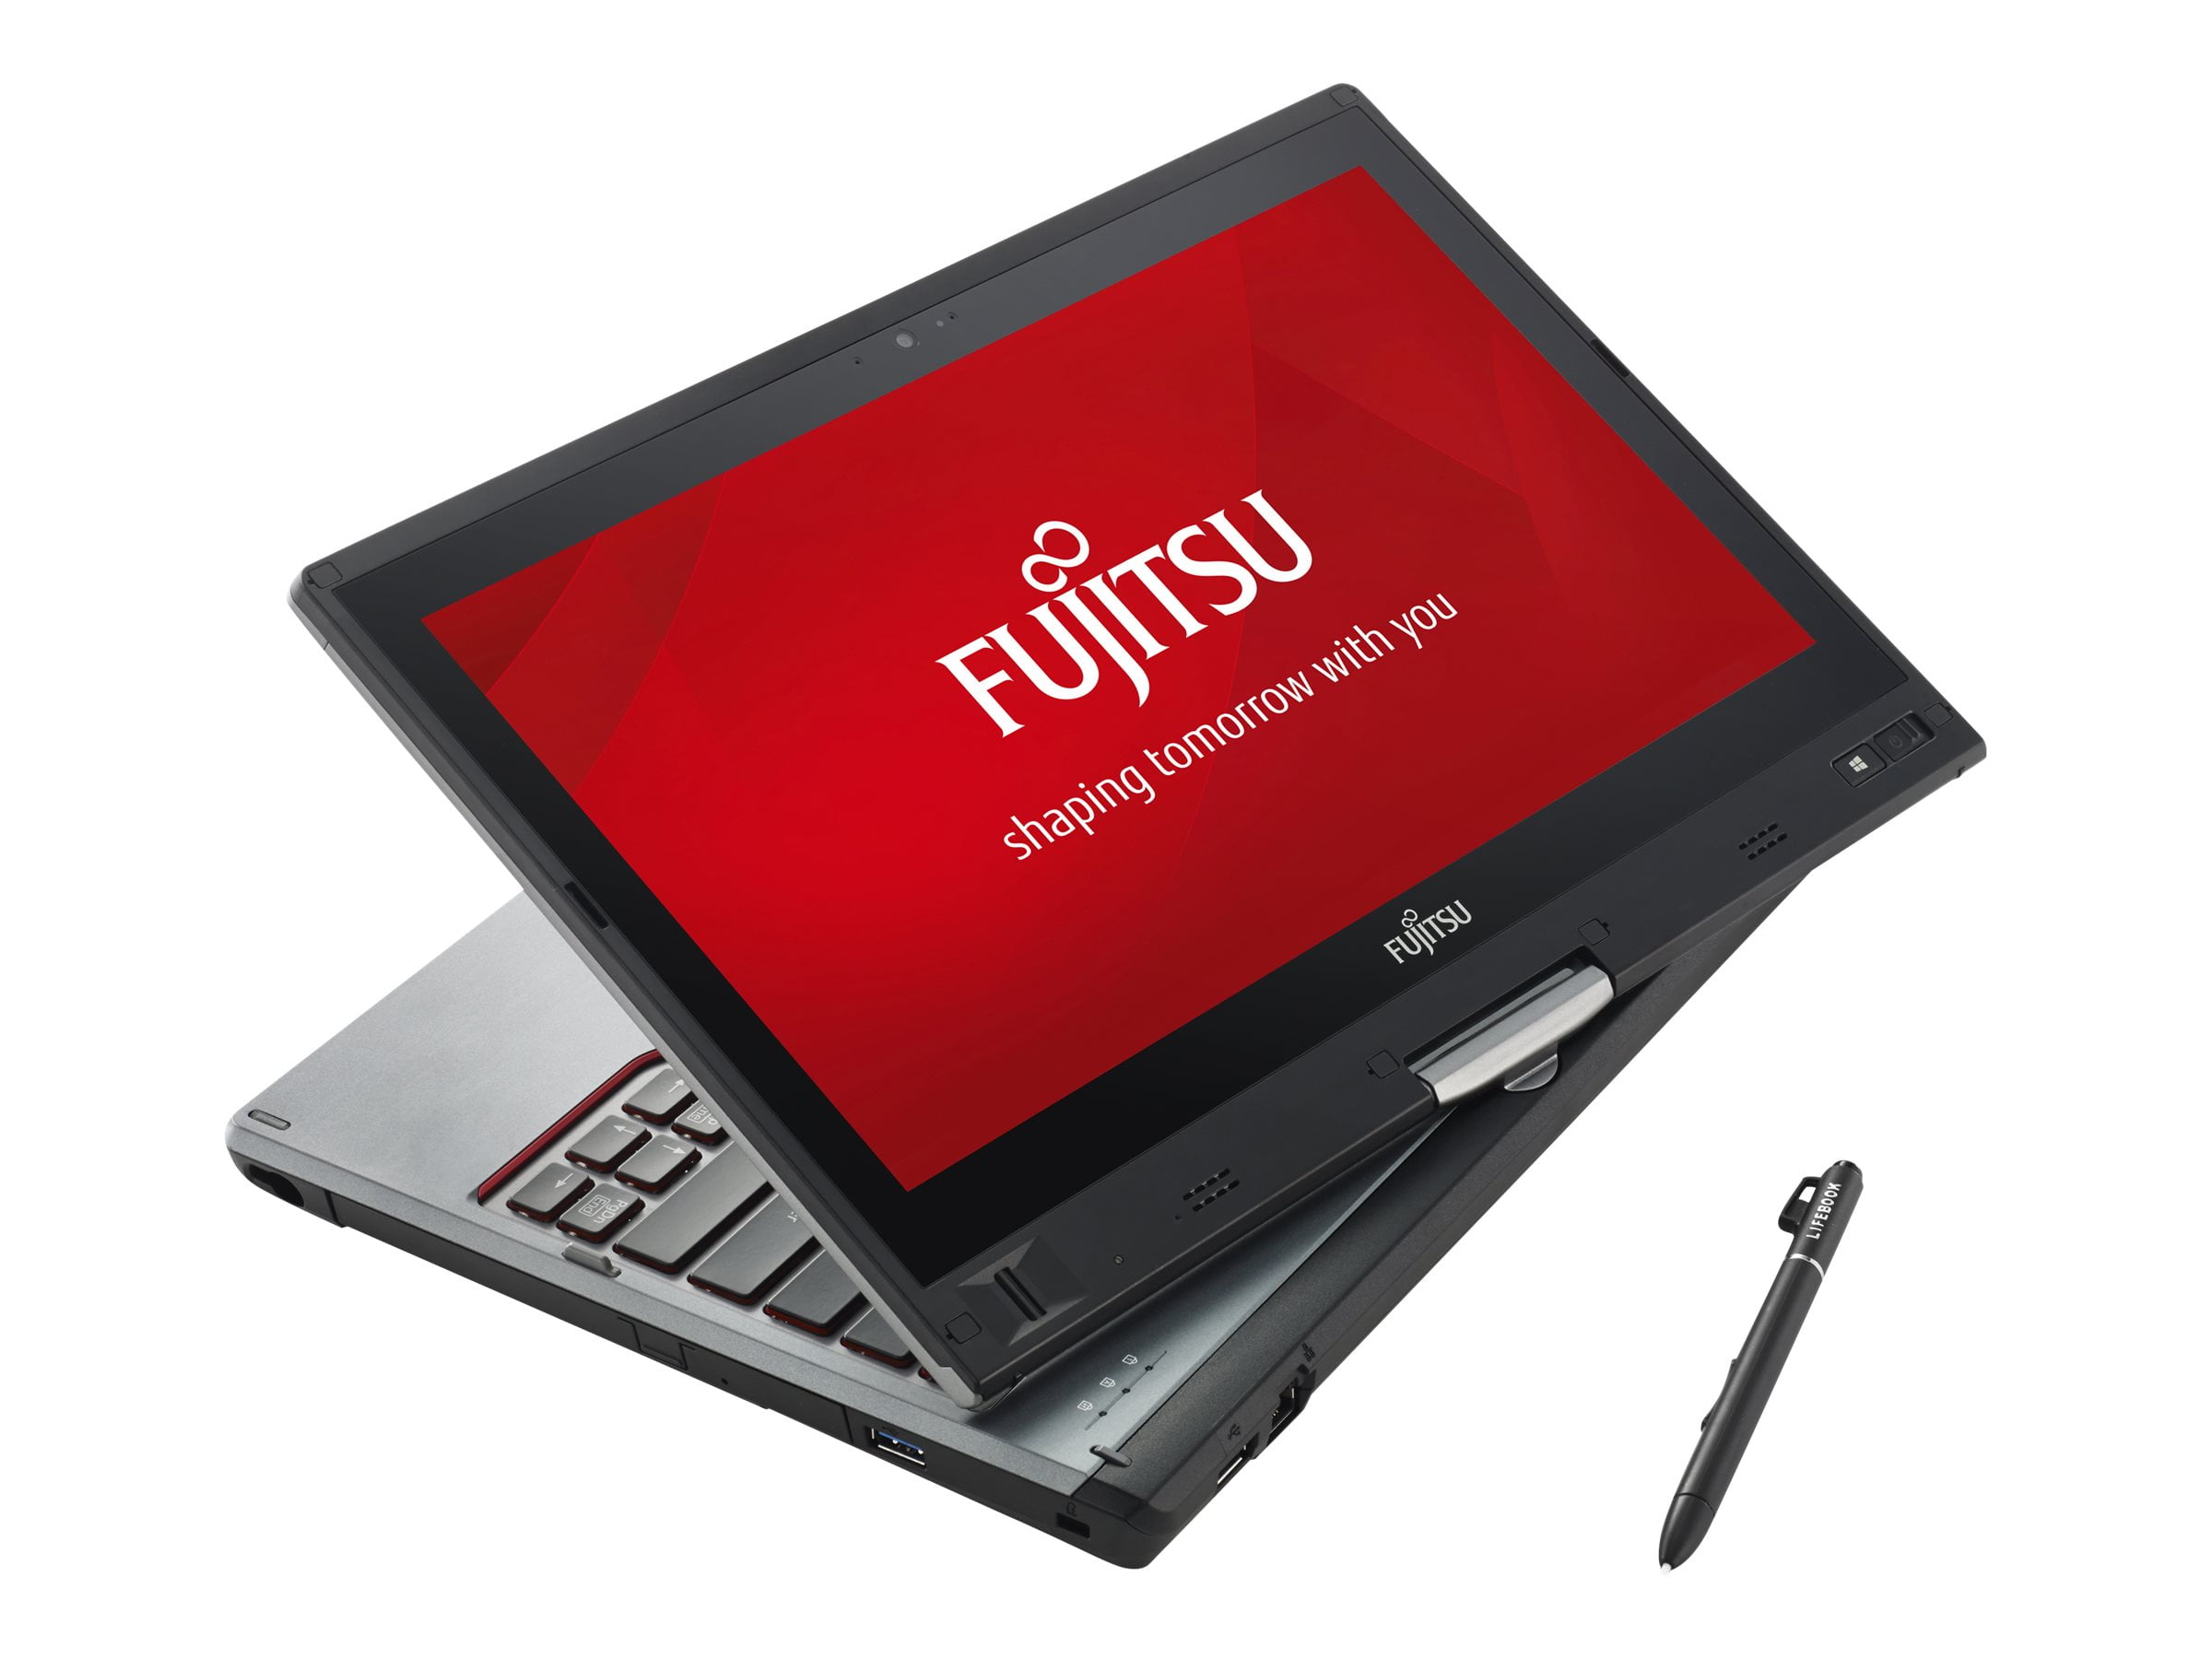 Fujitsu LIFEBOOK T725 - Convertible - Intel Core i5 - 5200U / up to 2.7 GHz  - Win 7 Pro 64-bit (includes Win 8.1 Pro 64-bit License) - HD Graphics 